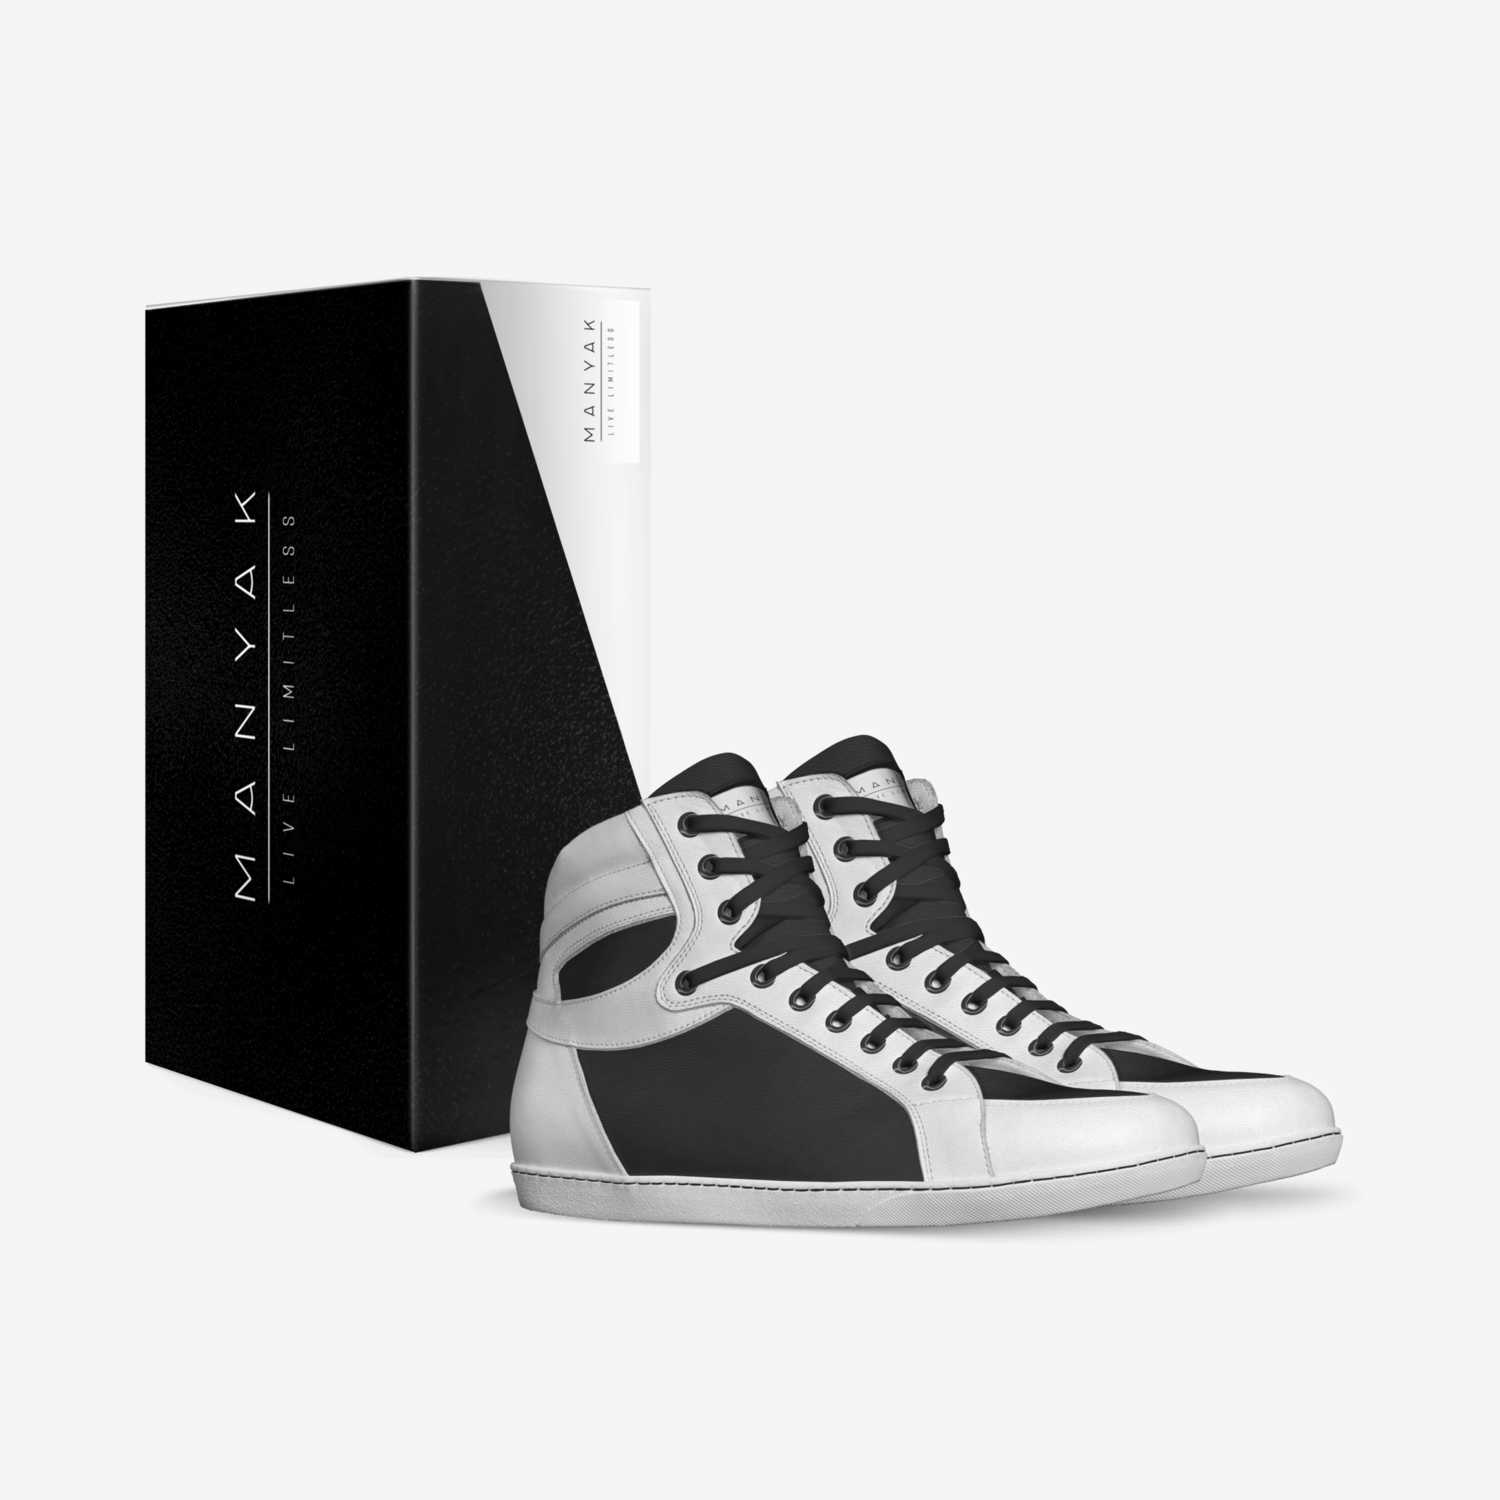 Manyak custom made in Italy shoes by Michael J. Watt Jr. | Box view